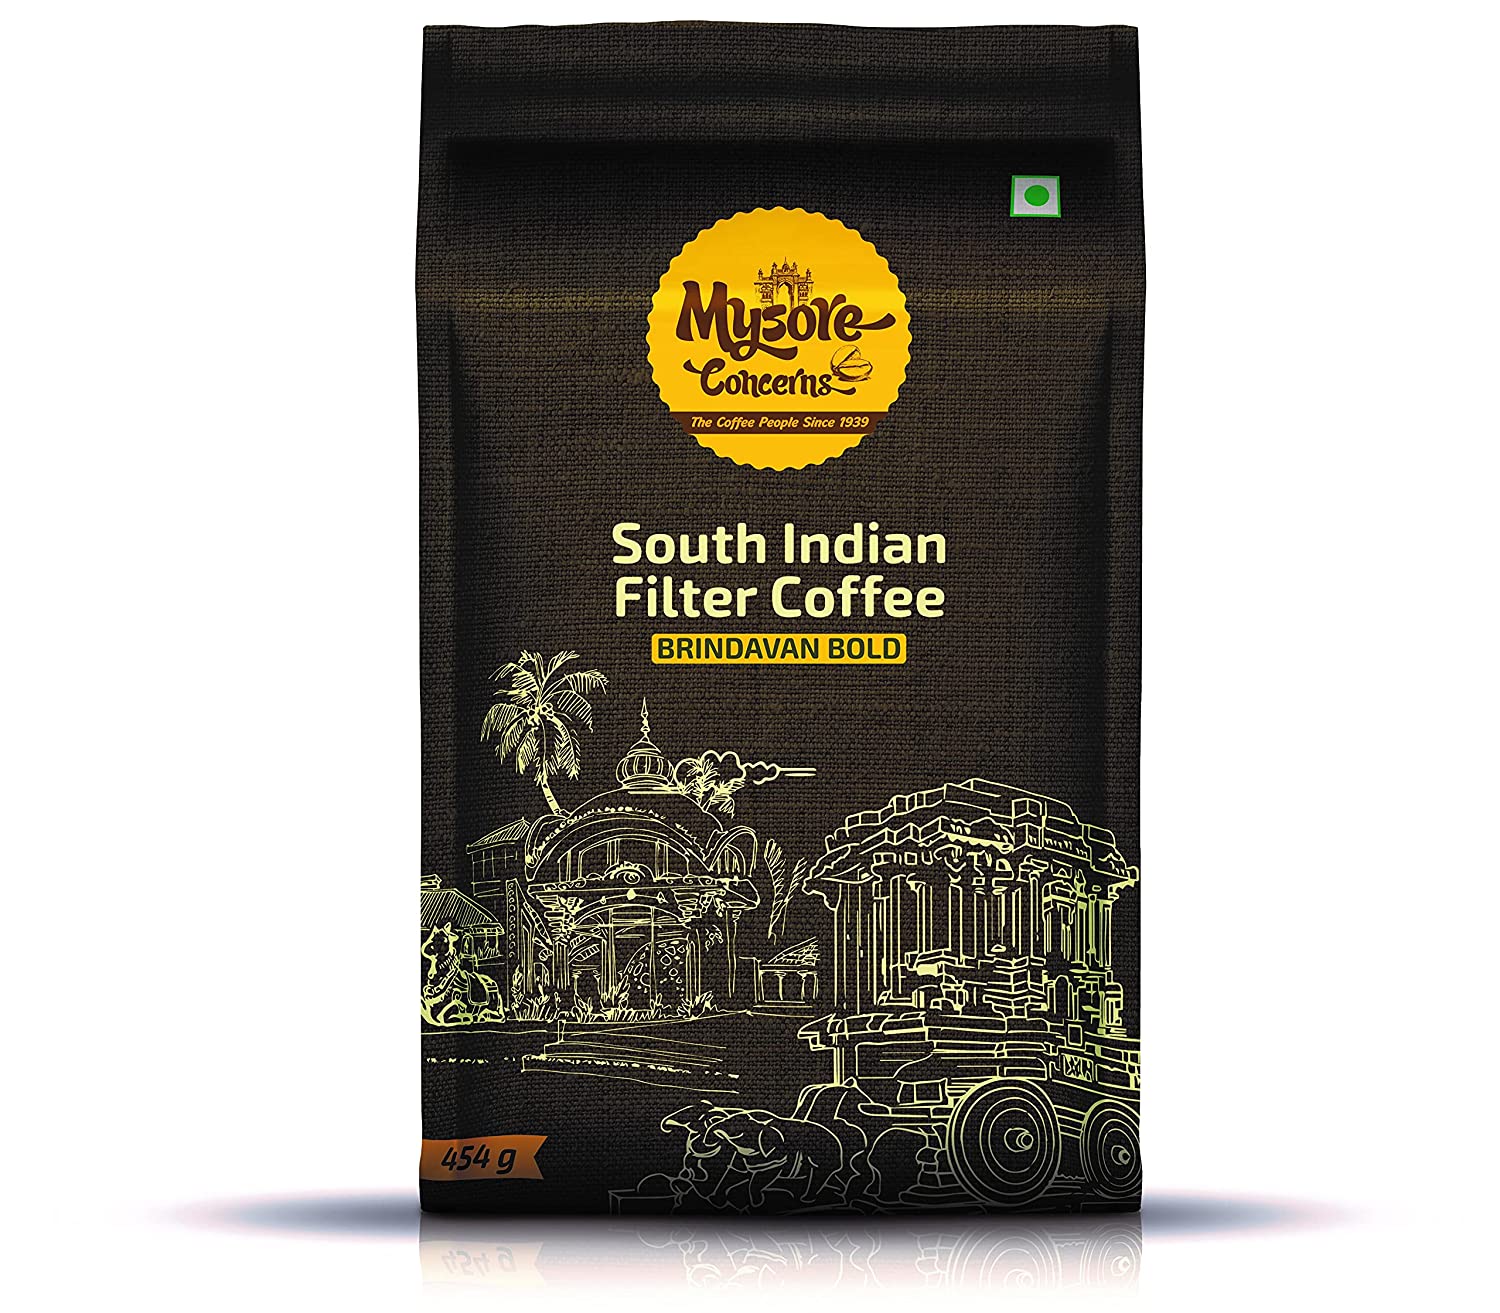 Mysore Concerns Brindavan Bold South Indian Filter Coffee Image